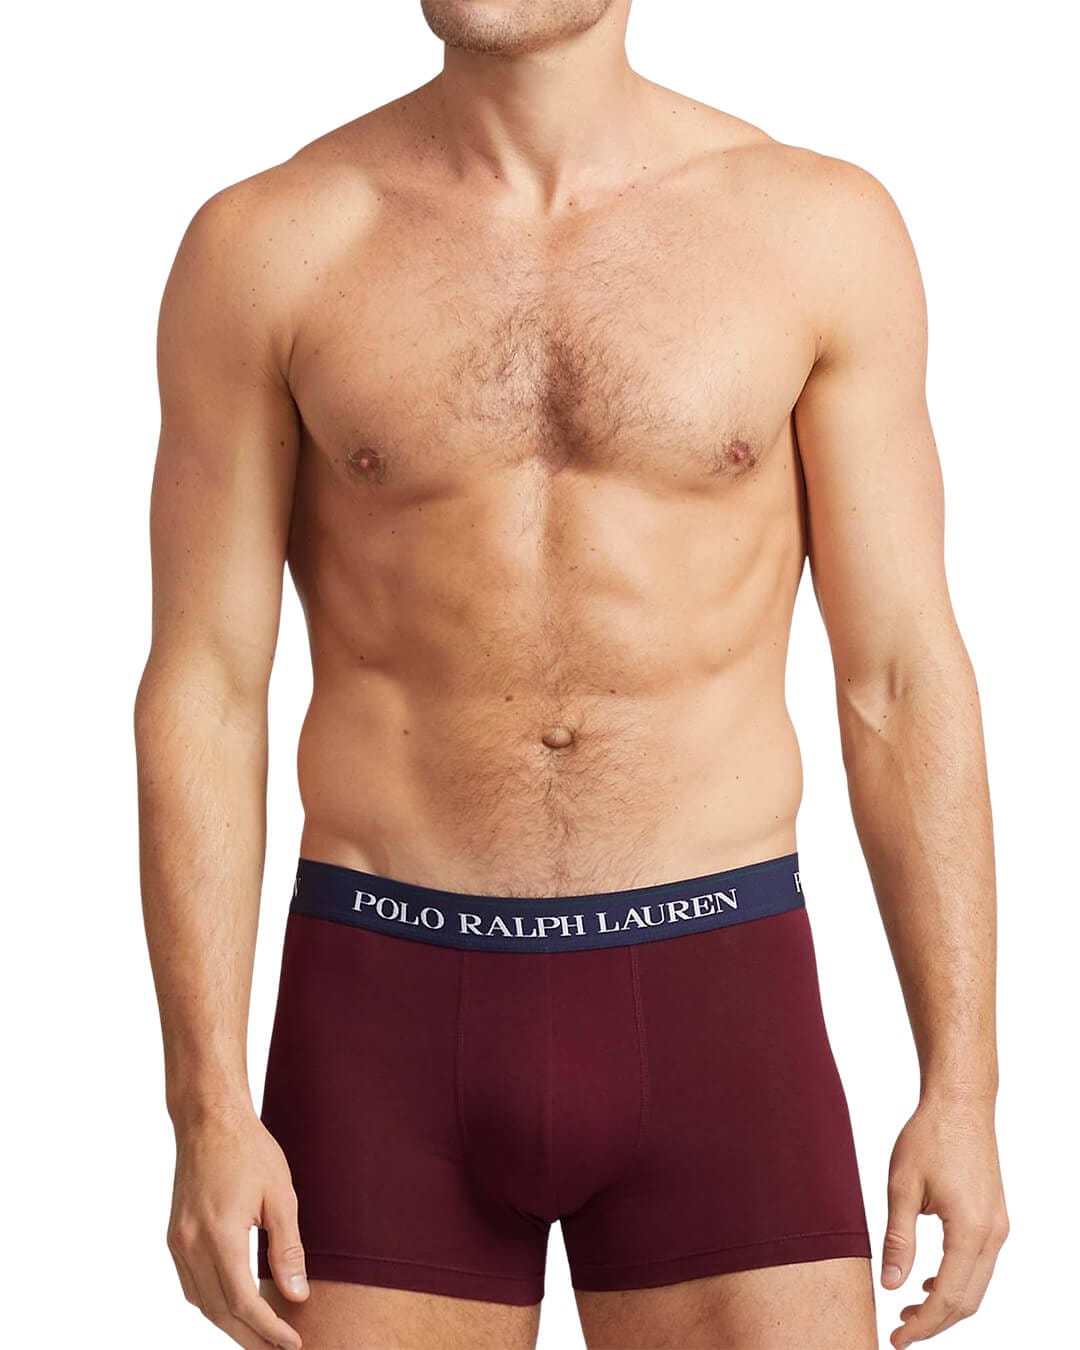 Polo Ralph Lauren Underwear CLSSIC TRUNK-3 PACK-TRUNK 3PK HRVD WINE/NAVY/HNT GREENAW23